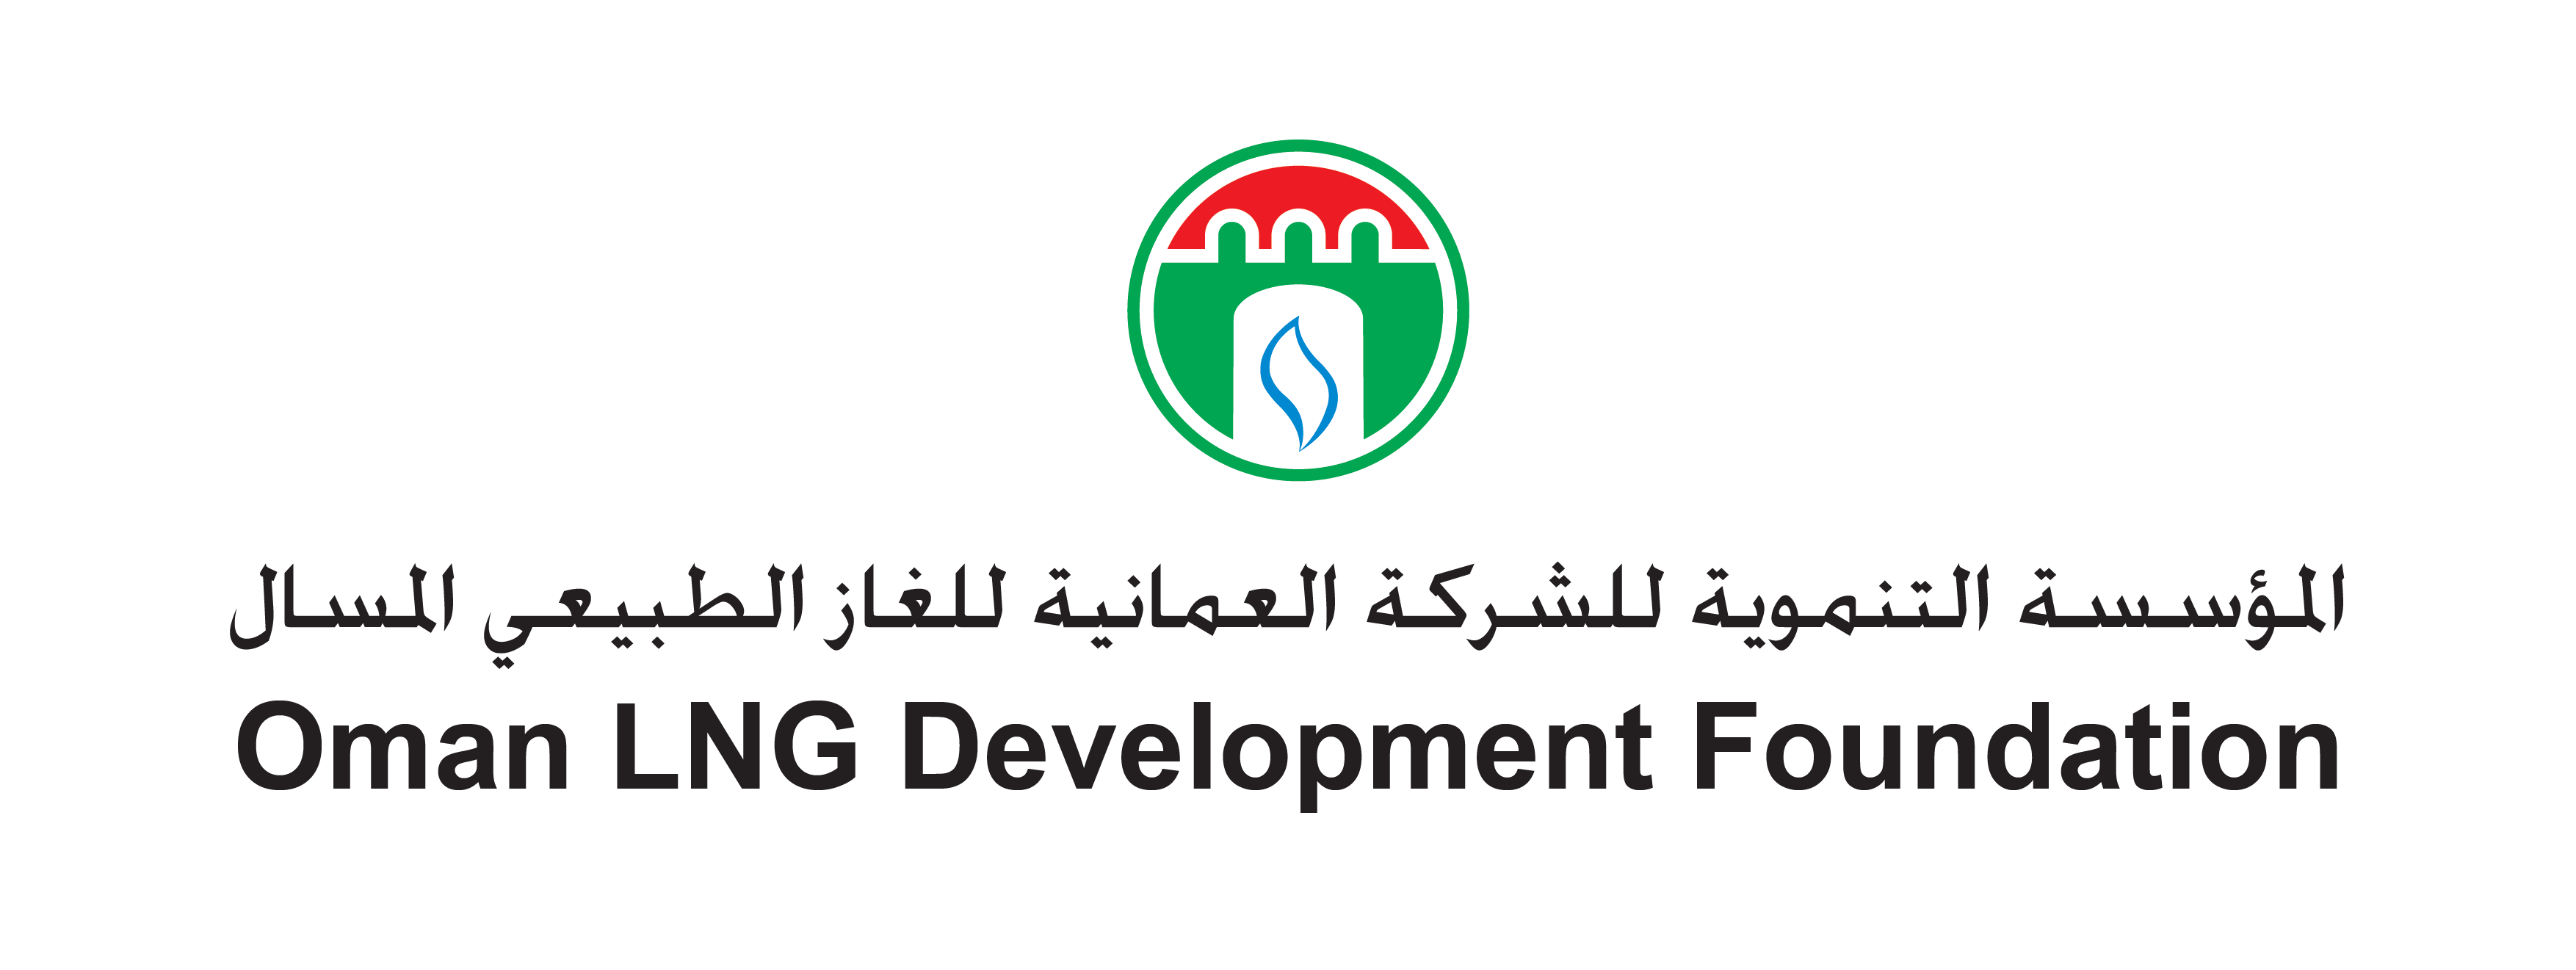 OLNG foundation logo-01